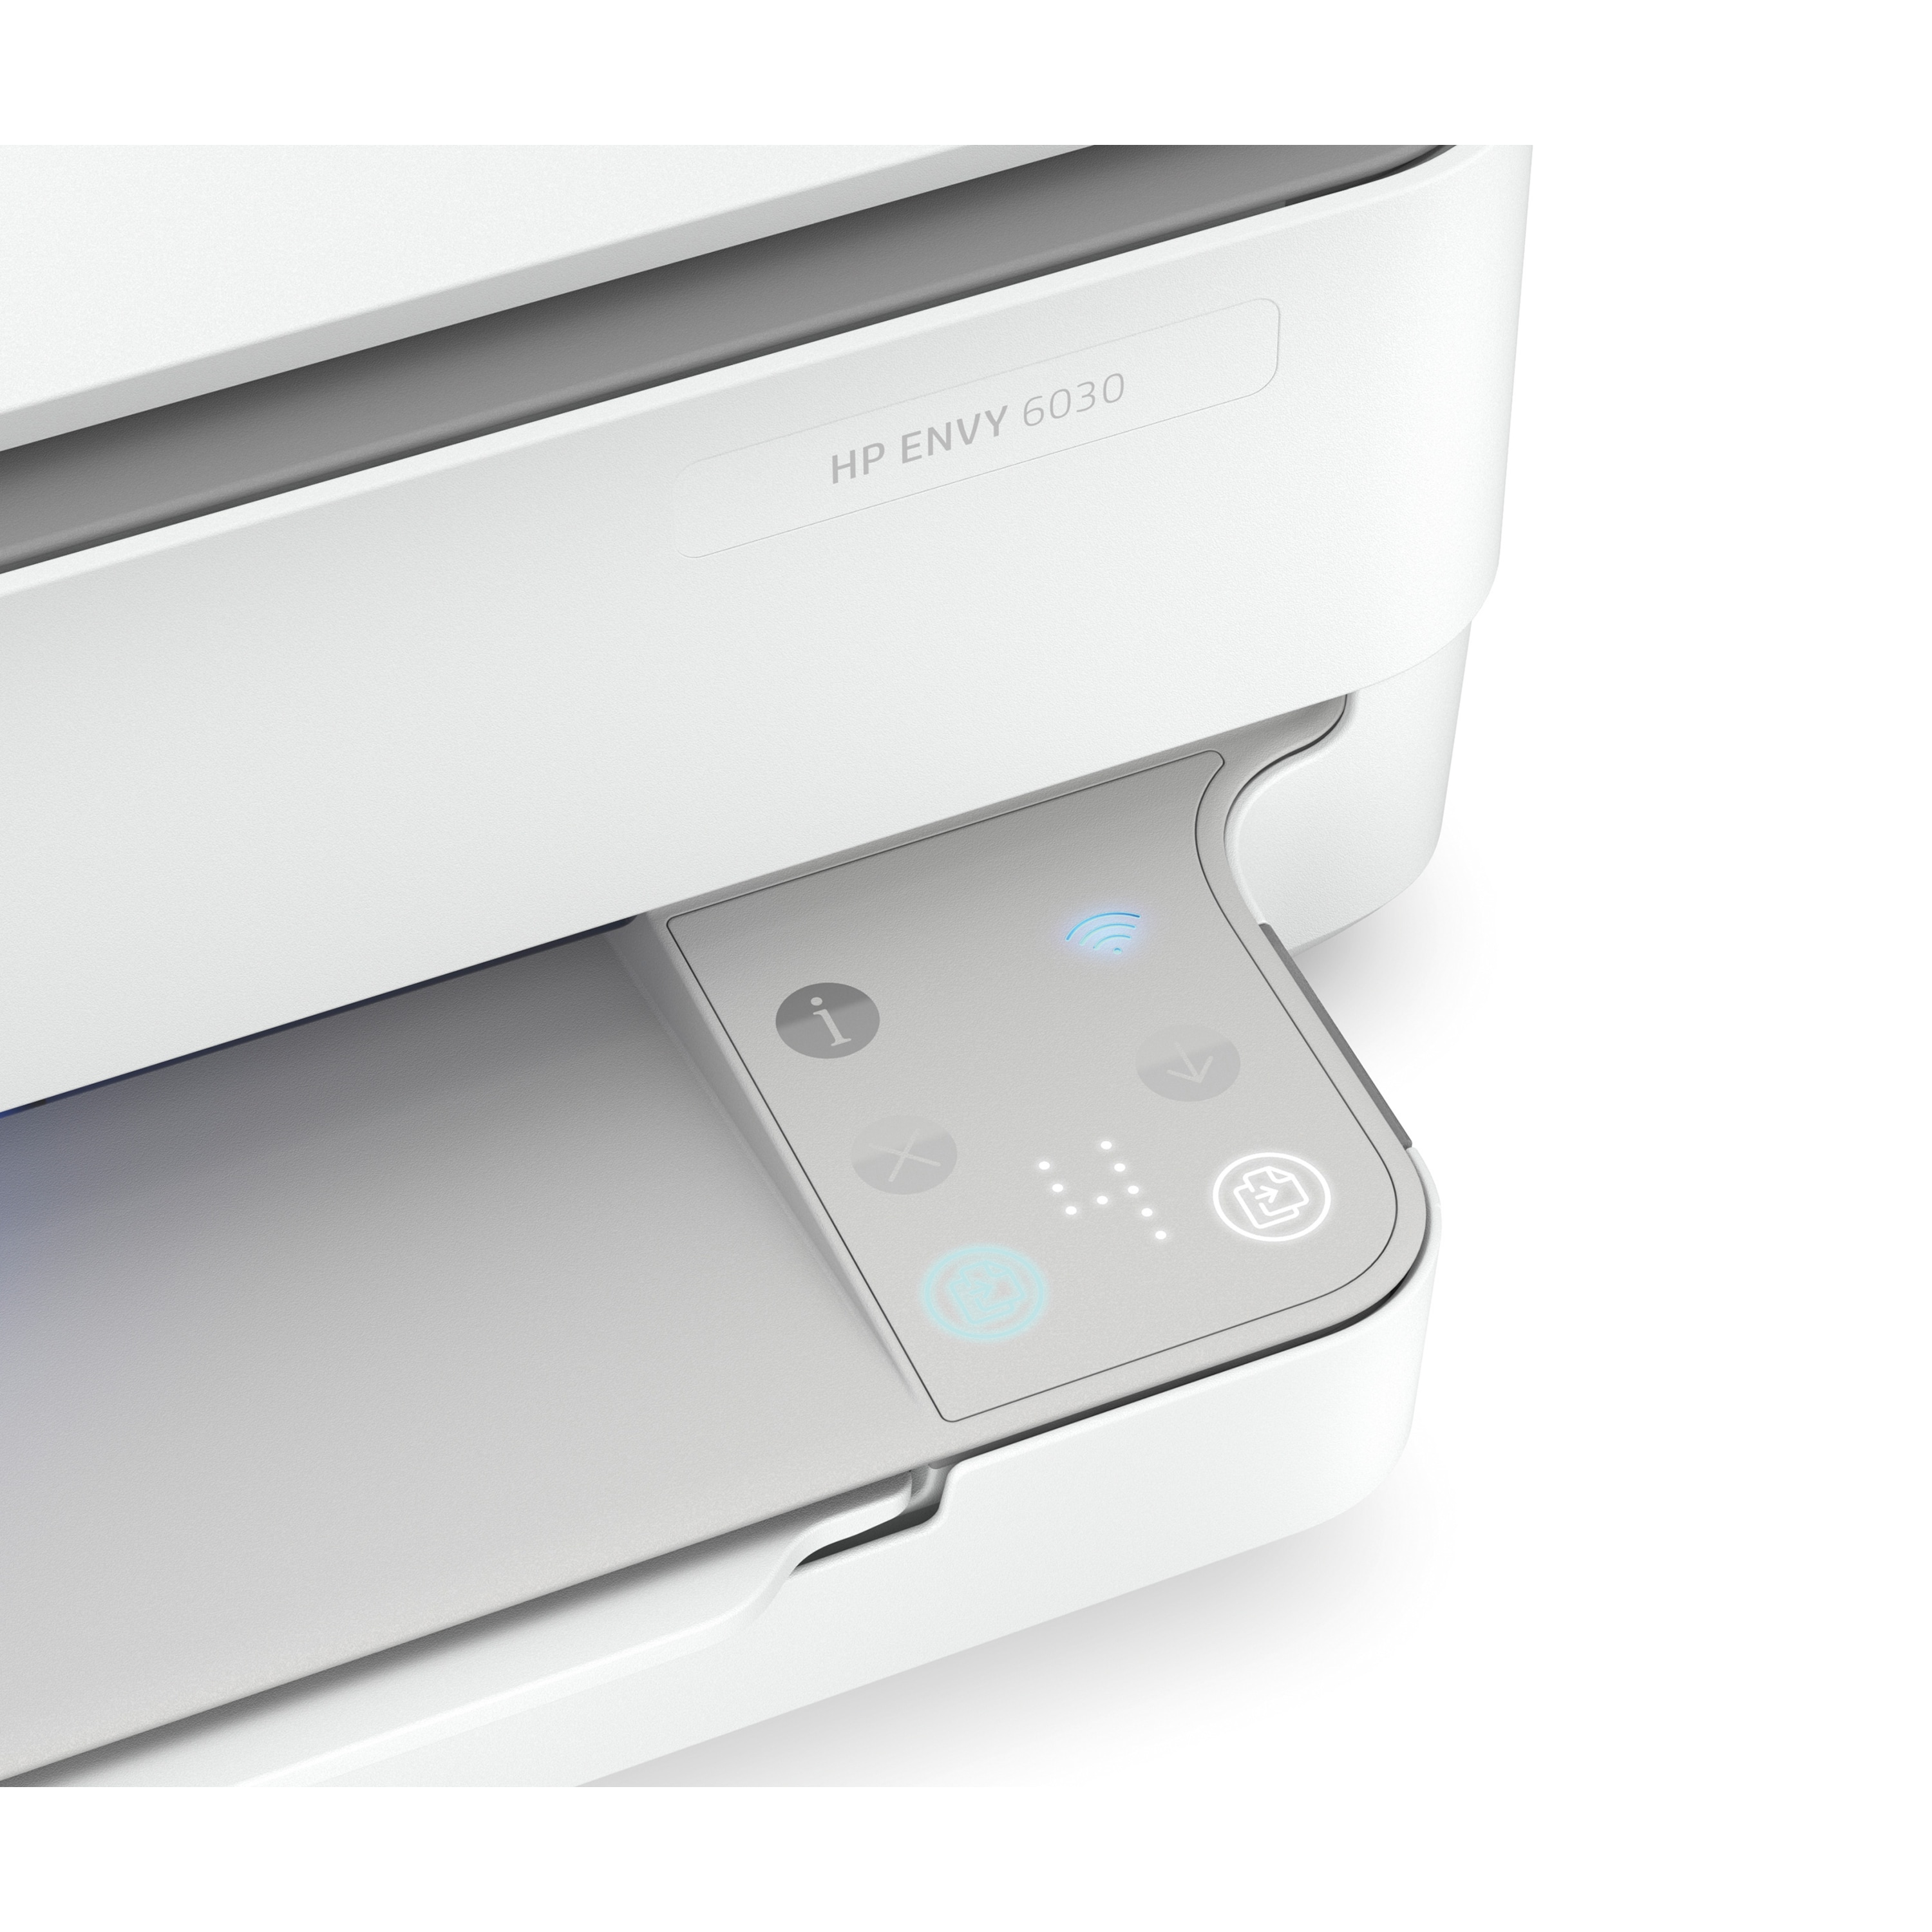 HP Envy 6030 All-in-One Drucker, Bluetooth® 5.0, Dual-Band WiFi, Drucken, Kopieren, Scannen, Wireless- und HP Smart App geeignet